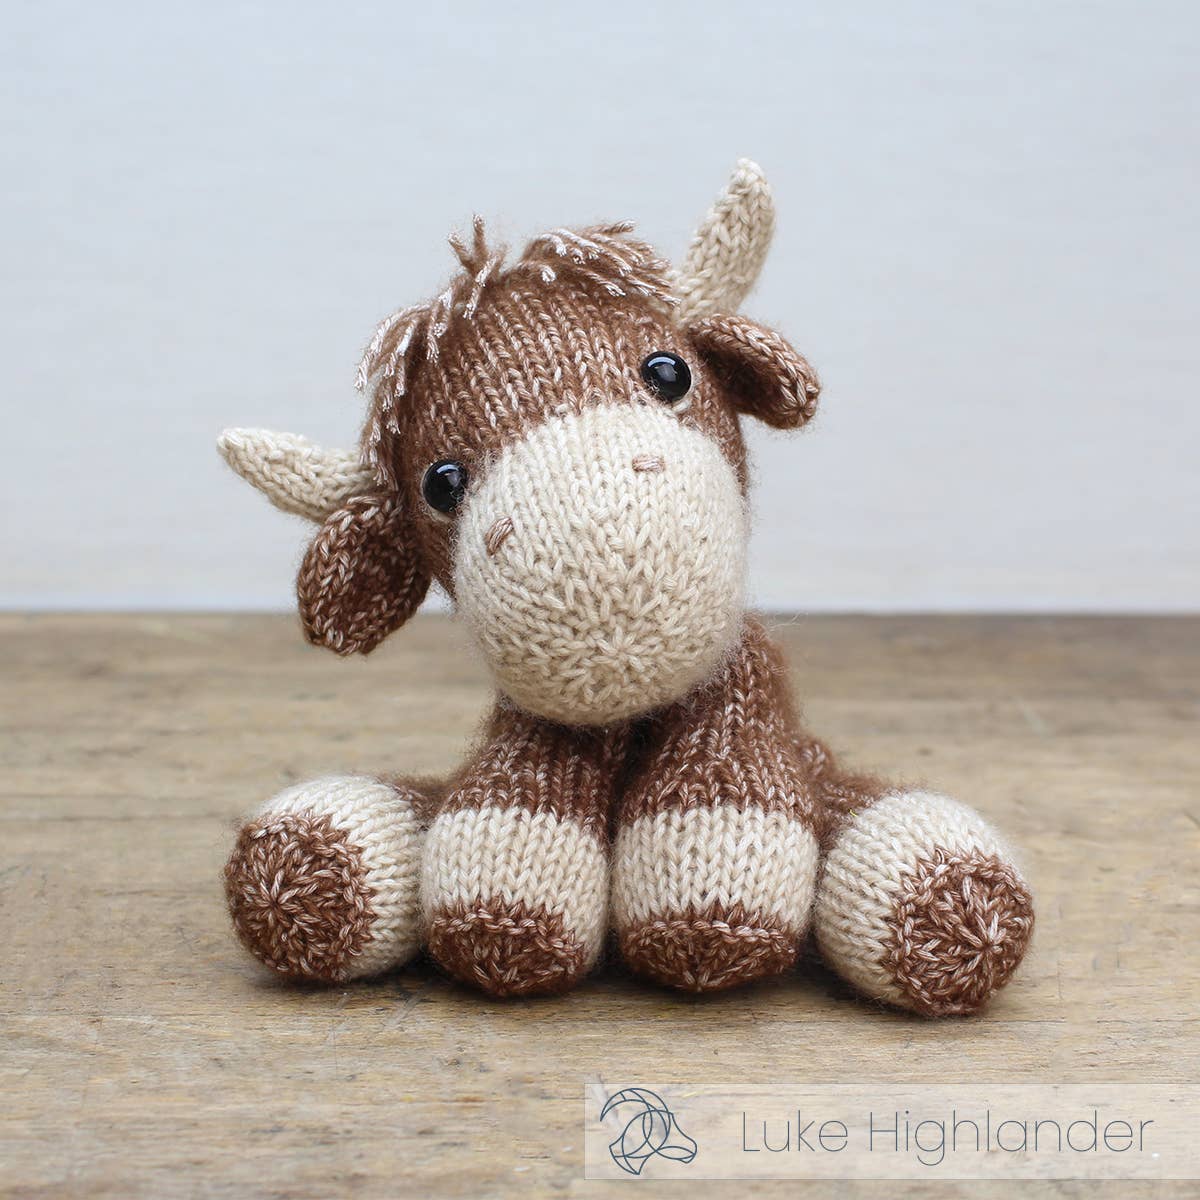 Hardicraft - Luke Highlander - The Highland Cow- Knitting Kit